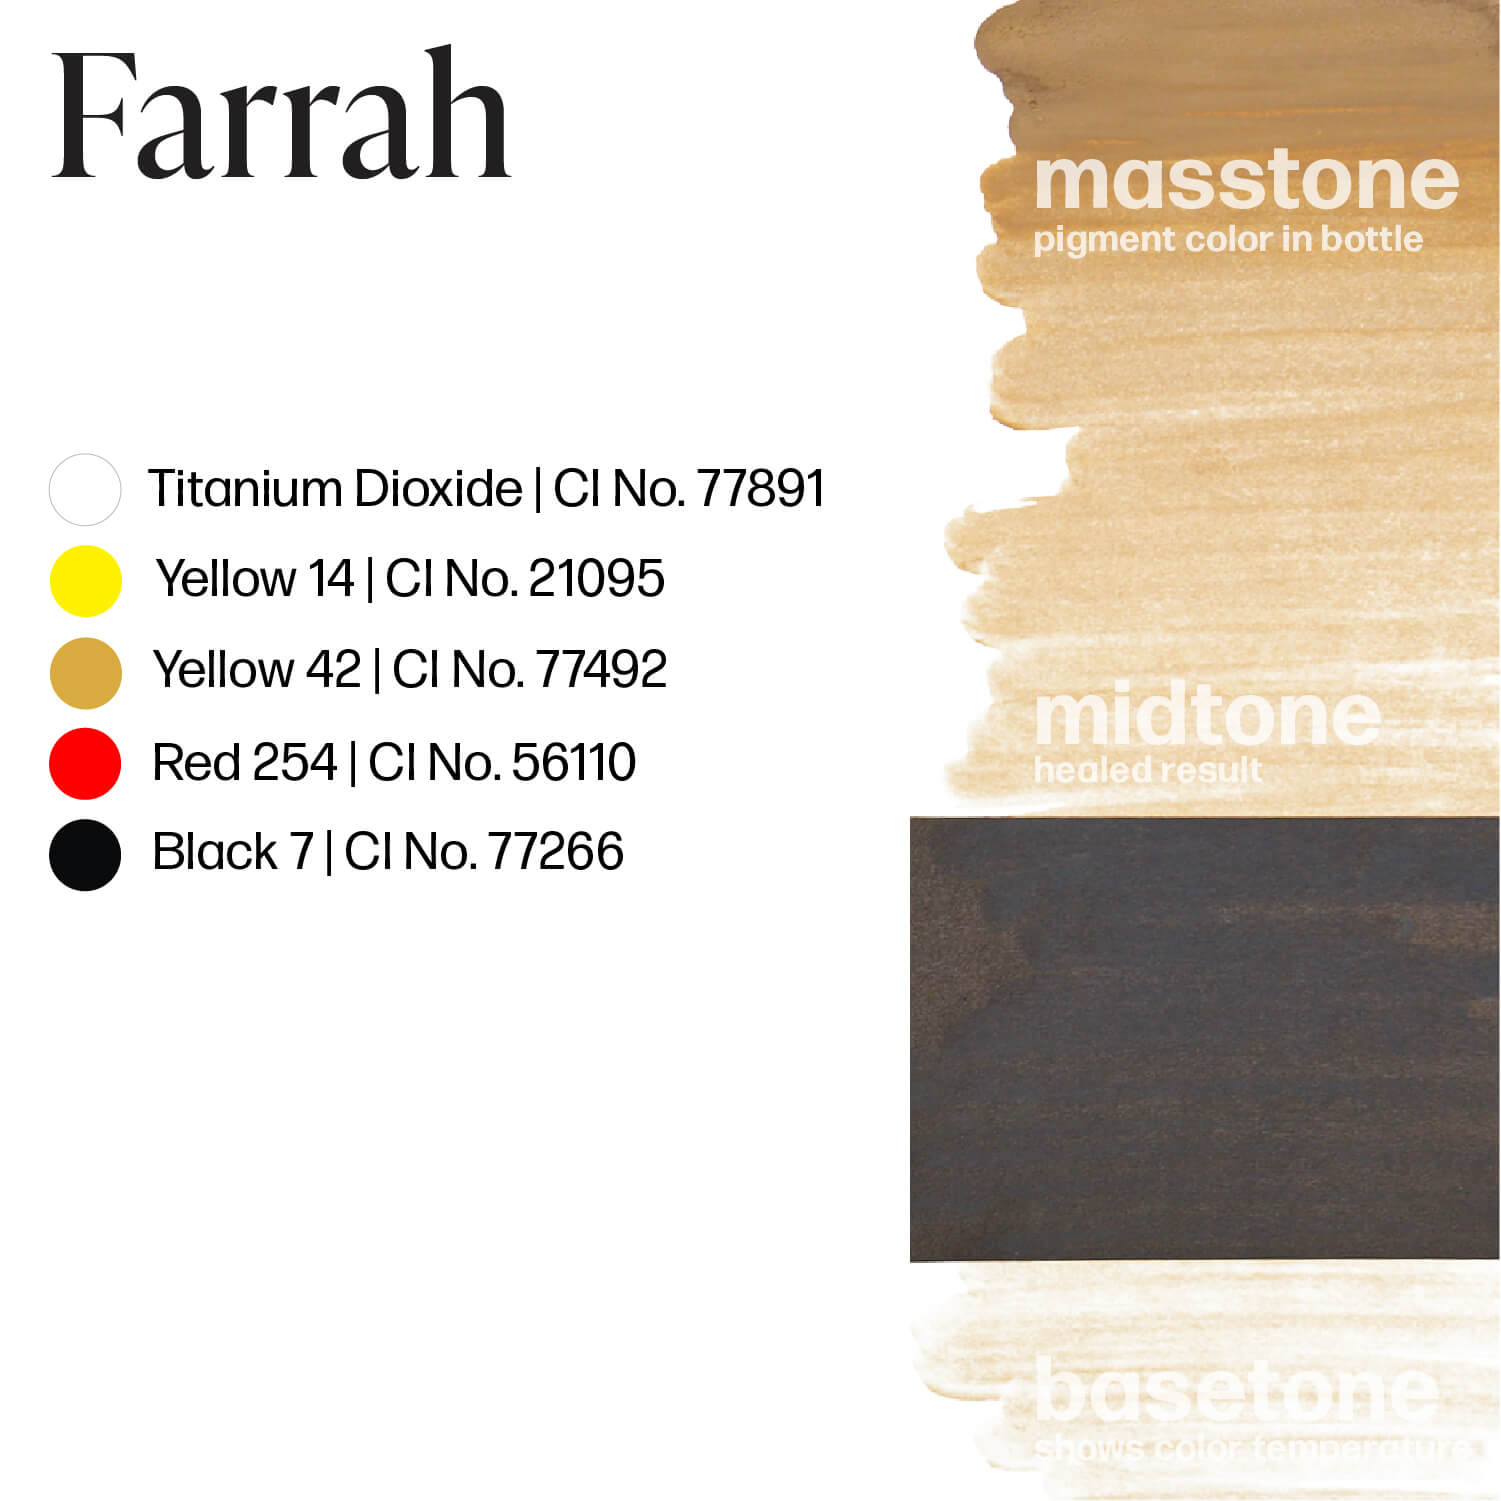 Perma Blend Farrah Brow Ink Drawdown Masstone Midtone Basetone